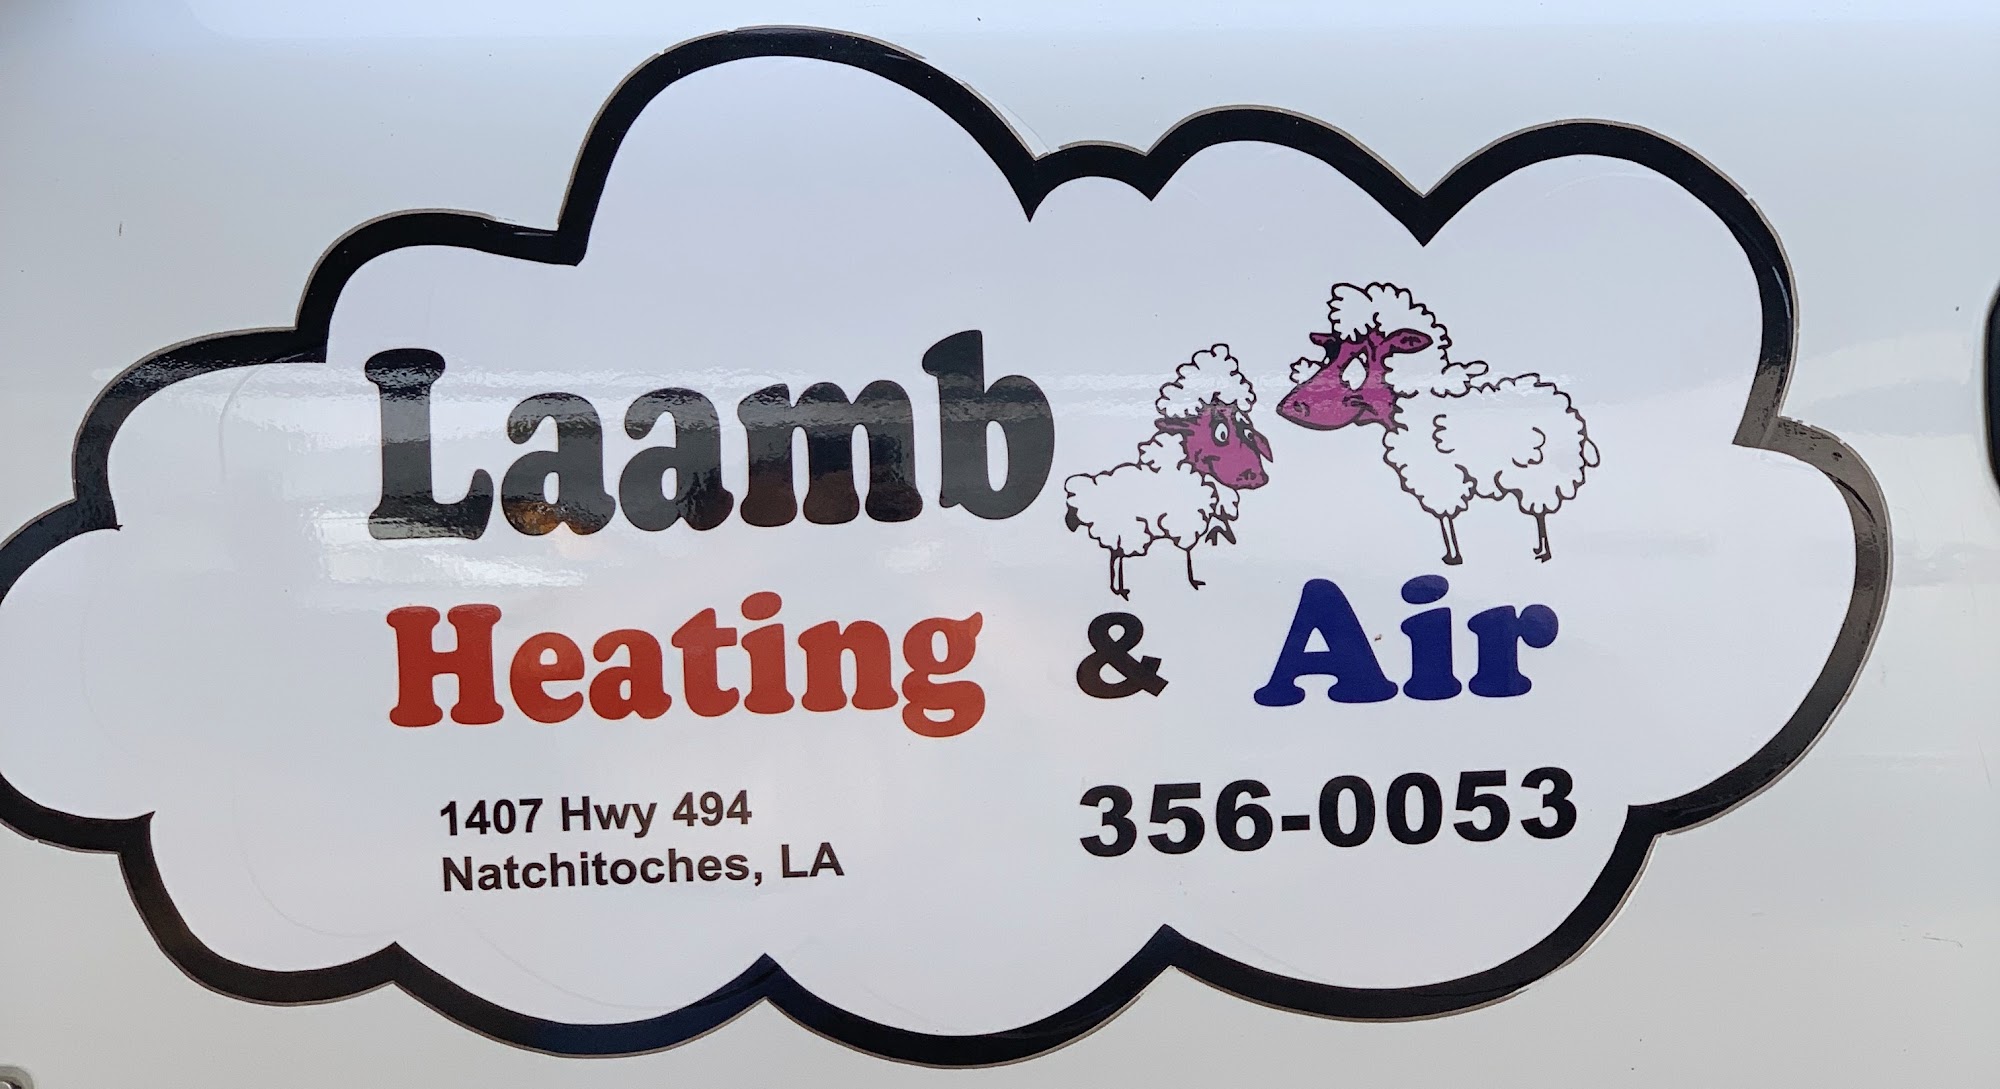 Laamb Heating & Air